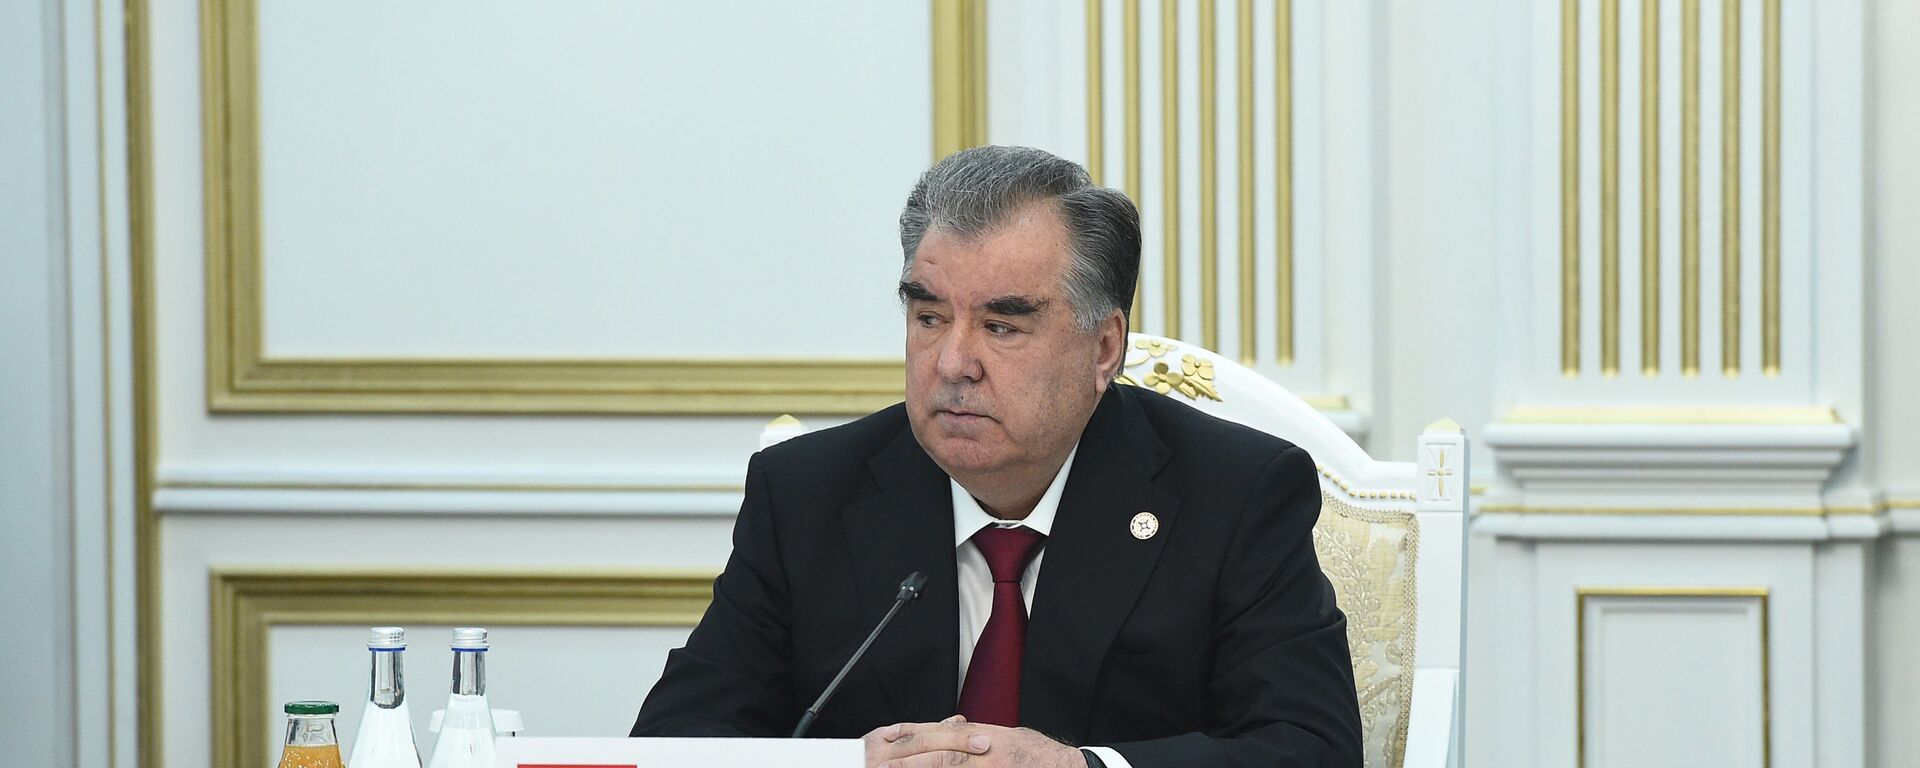 Президент Таджикистана Эмомали Рахмон на заседании Совета коллективной безопасности ОДКБ  - Sputnik Таджикистан, 1920, 28.09.2020